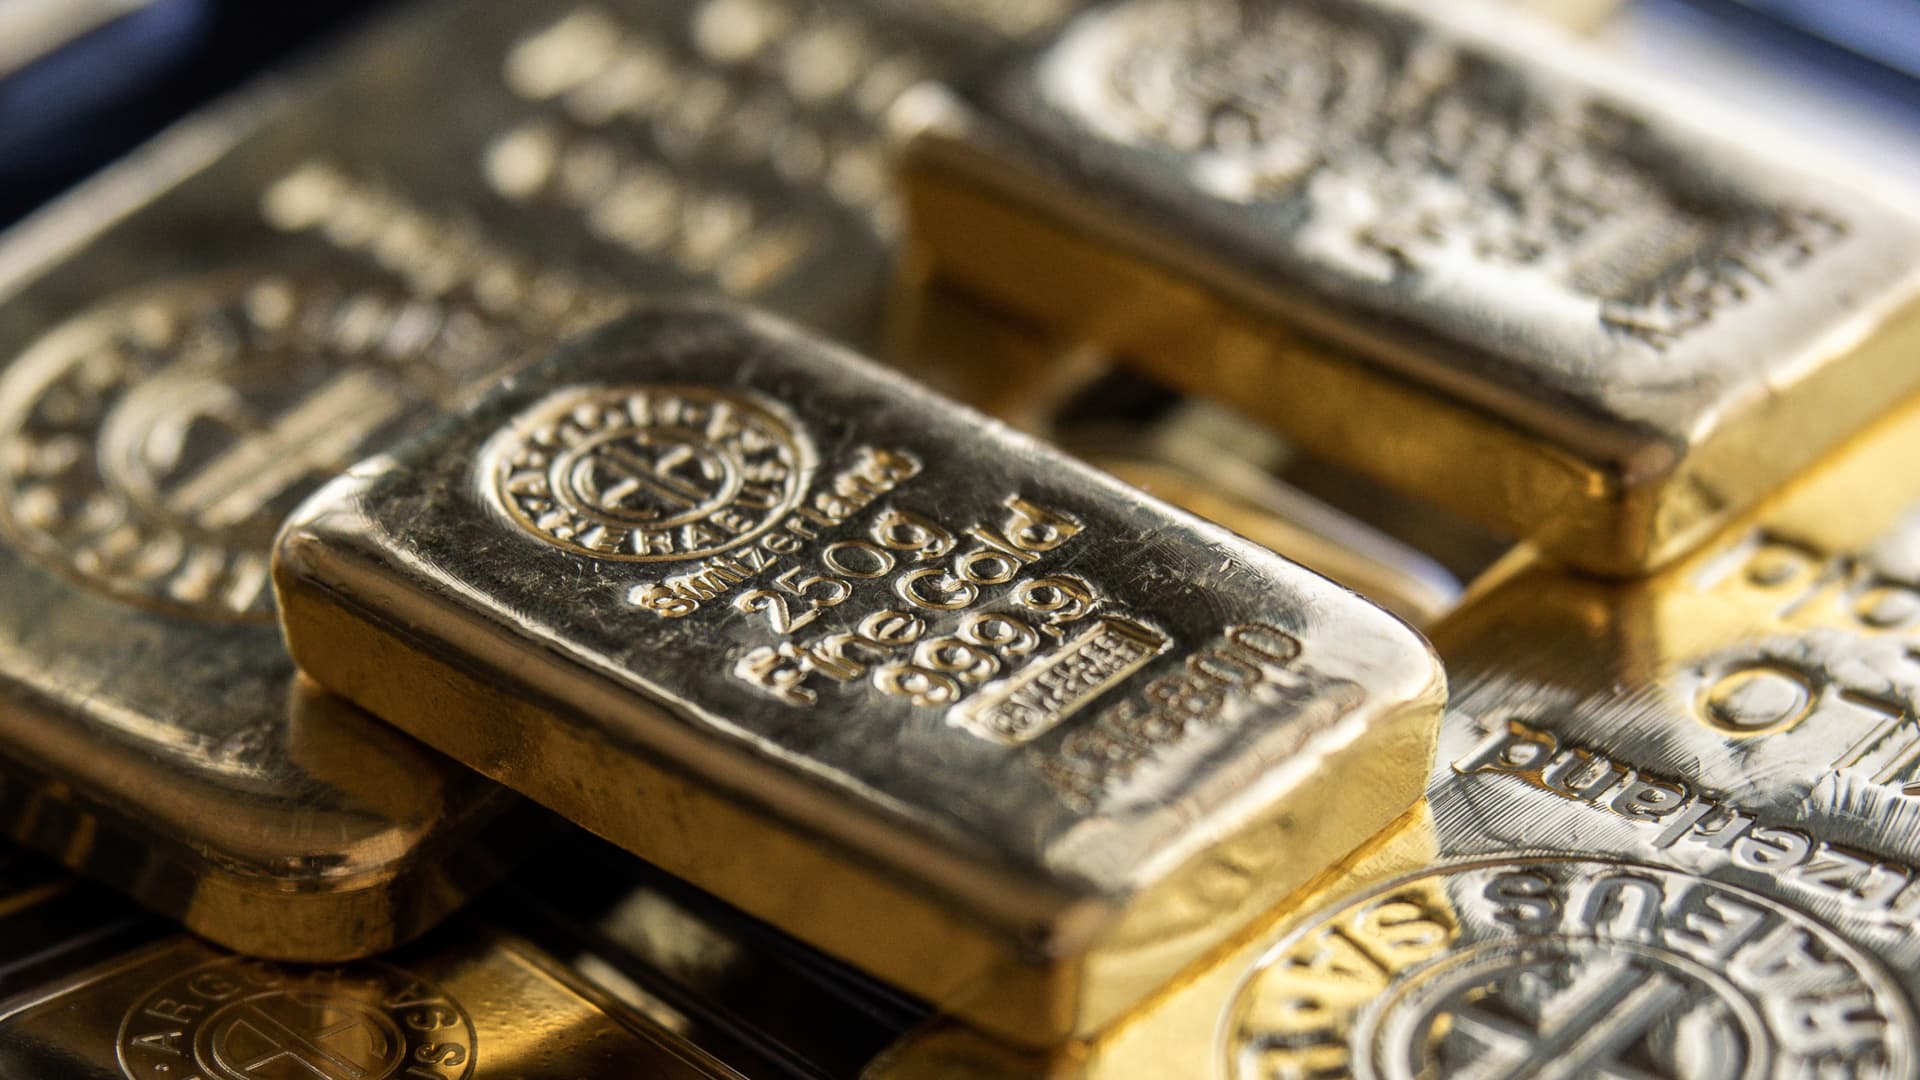 Goldman on how gold prices could perform under 4 economic scenarios